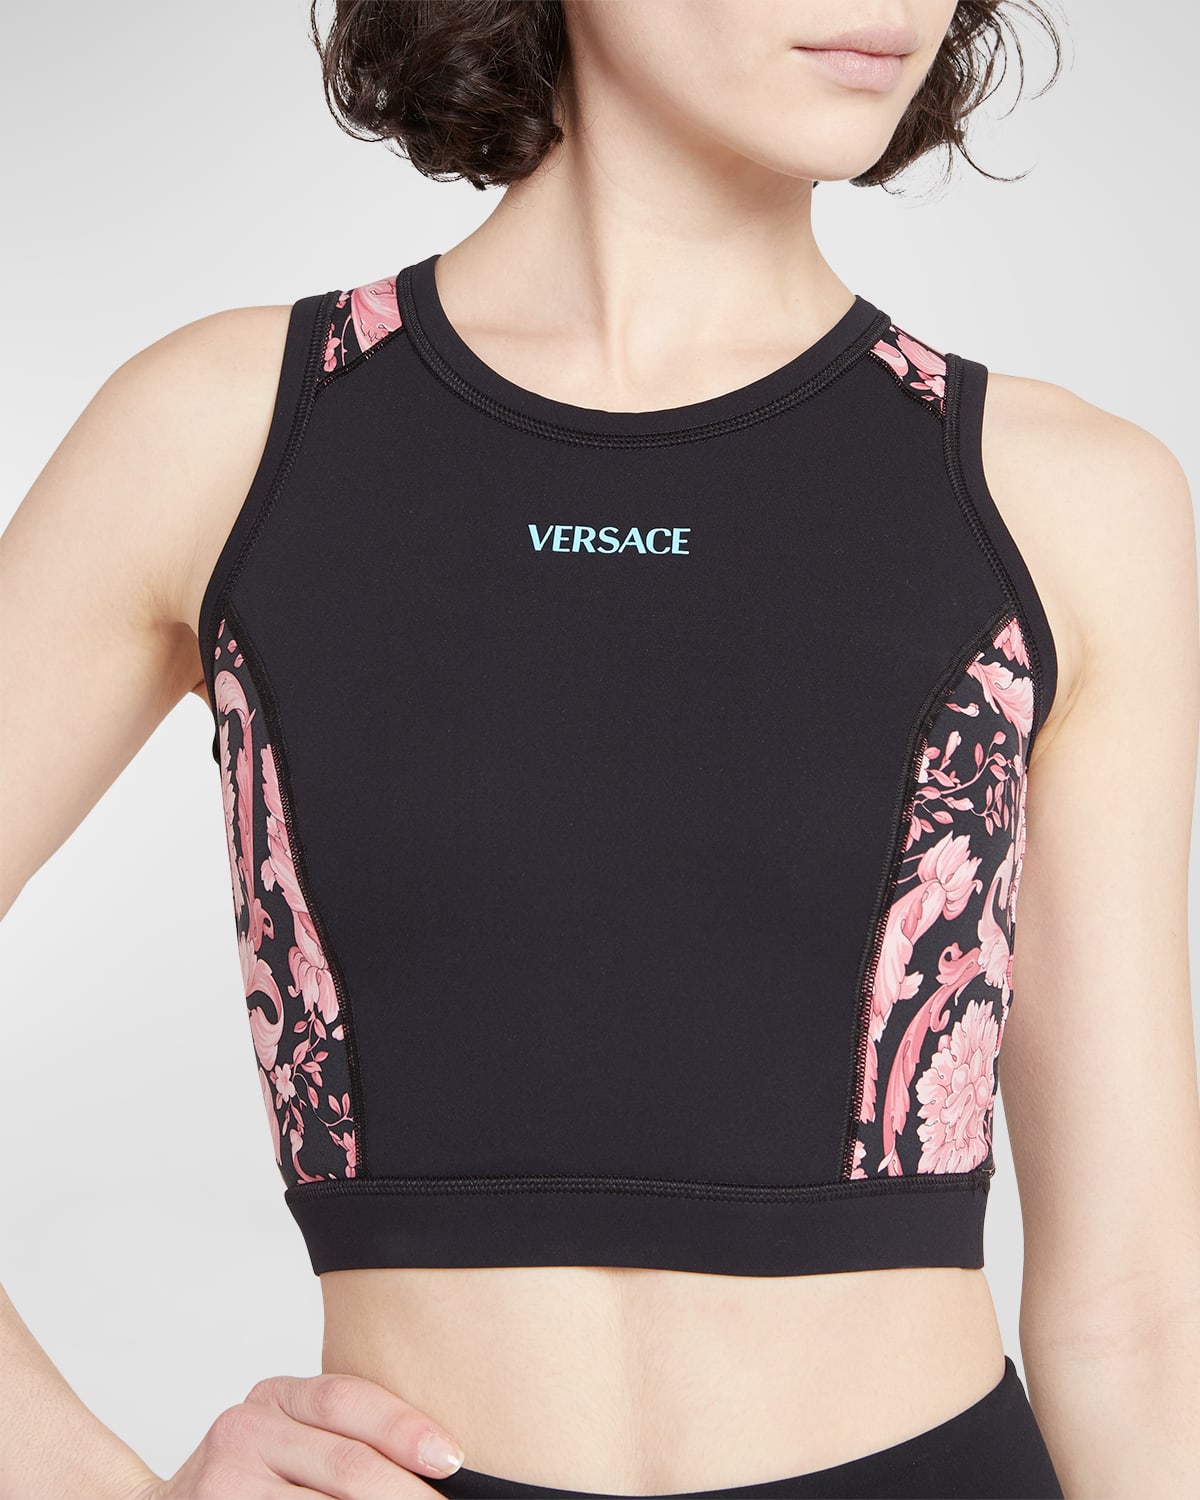 Versace Barocco Gym Sports Bra In Pink Black